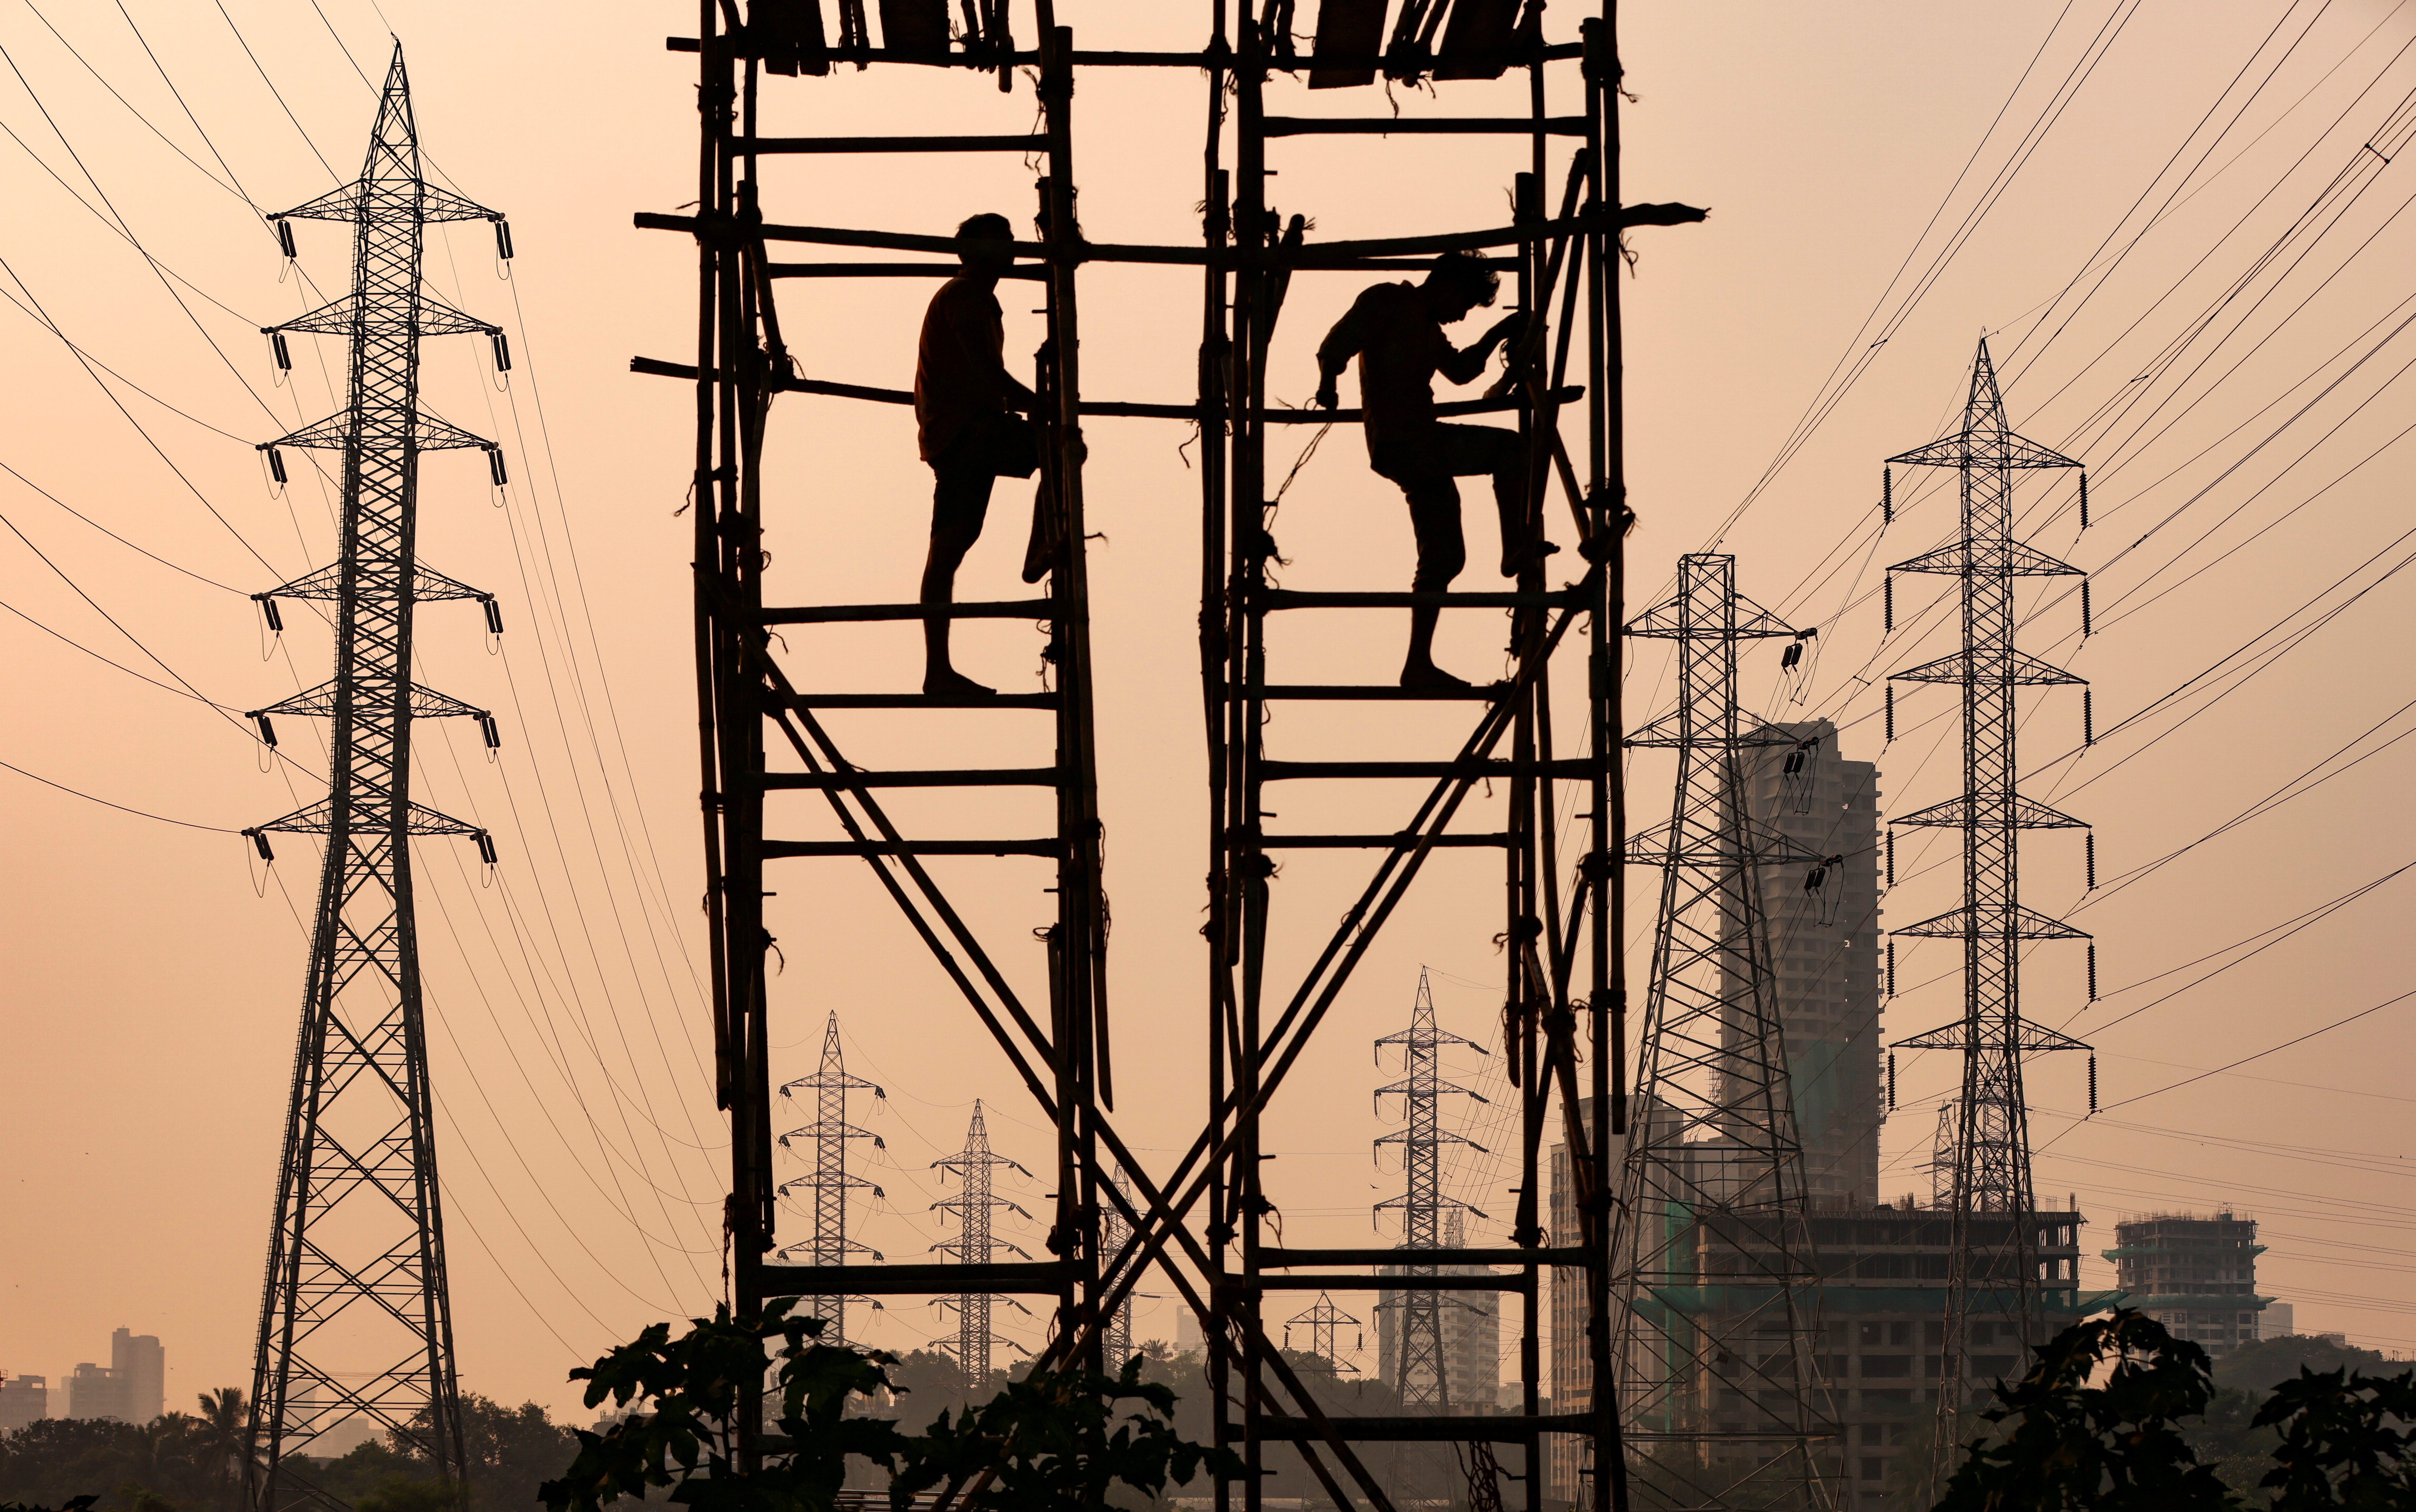 Labourers work next to electricity pylons in Mumbai